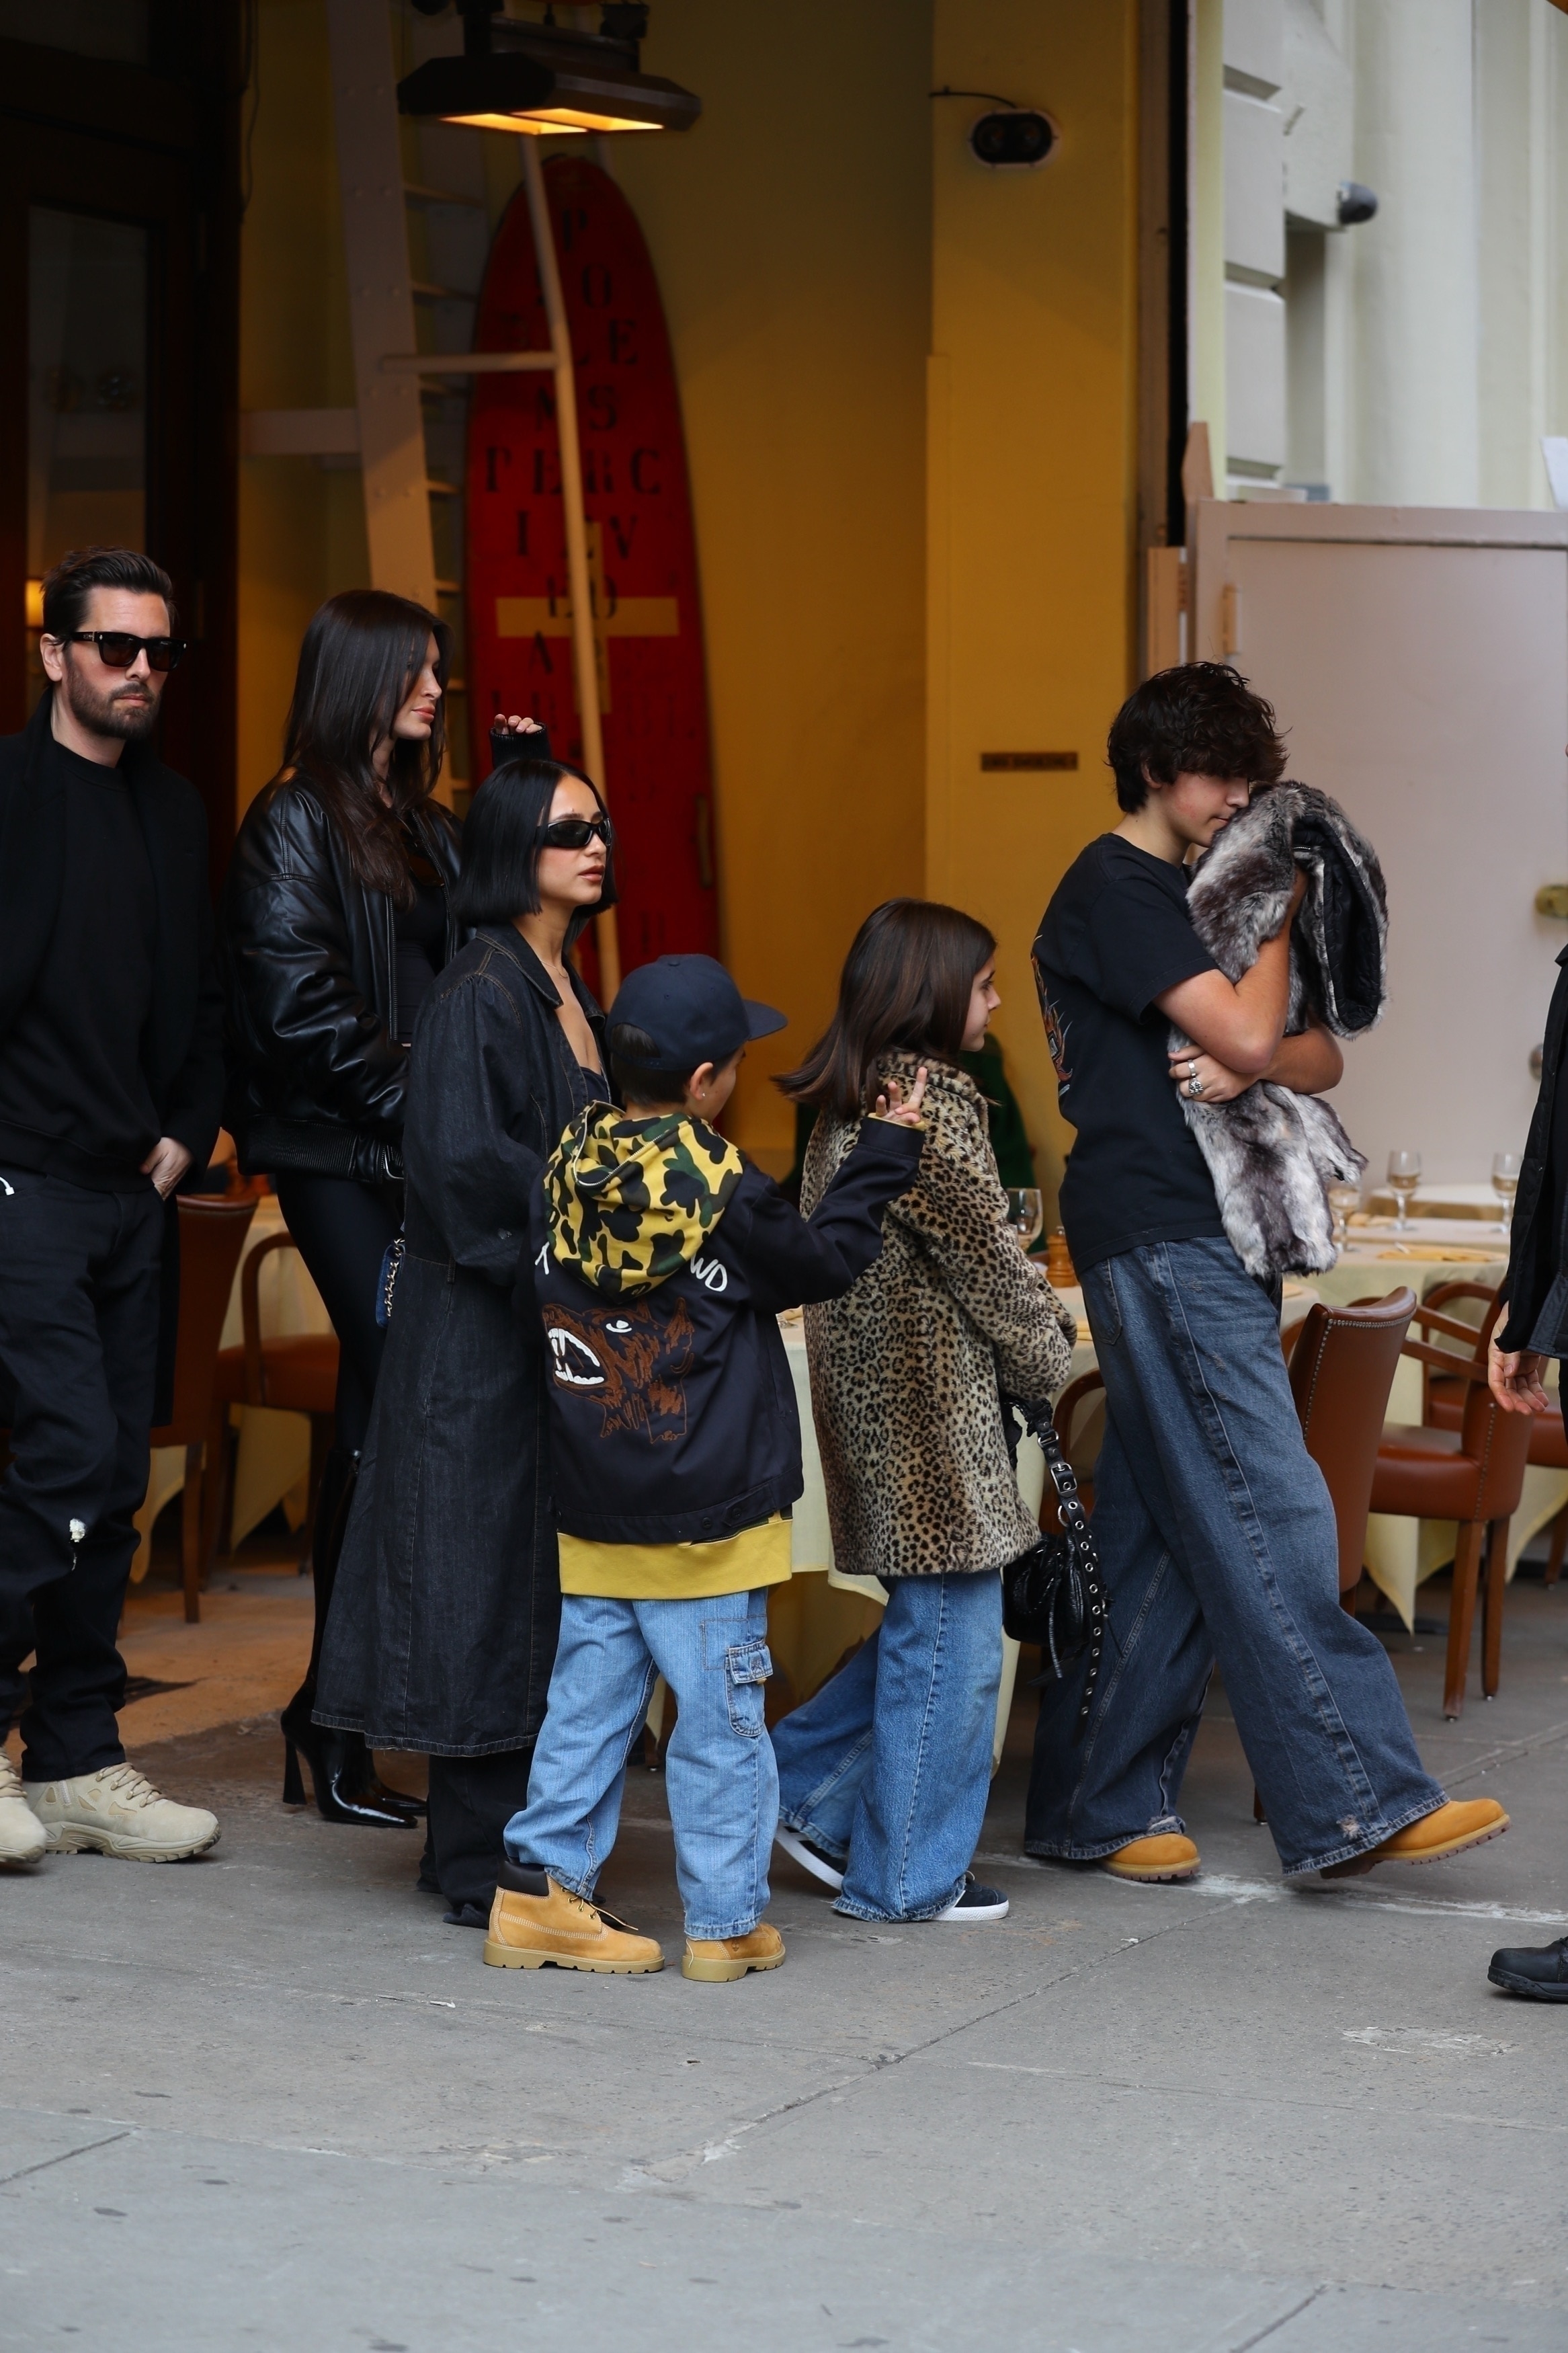 All three of Scott's children, who he shares with Kourtney Kardashian, were present